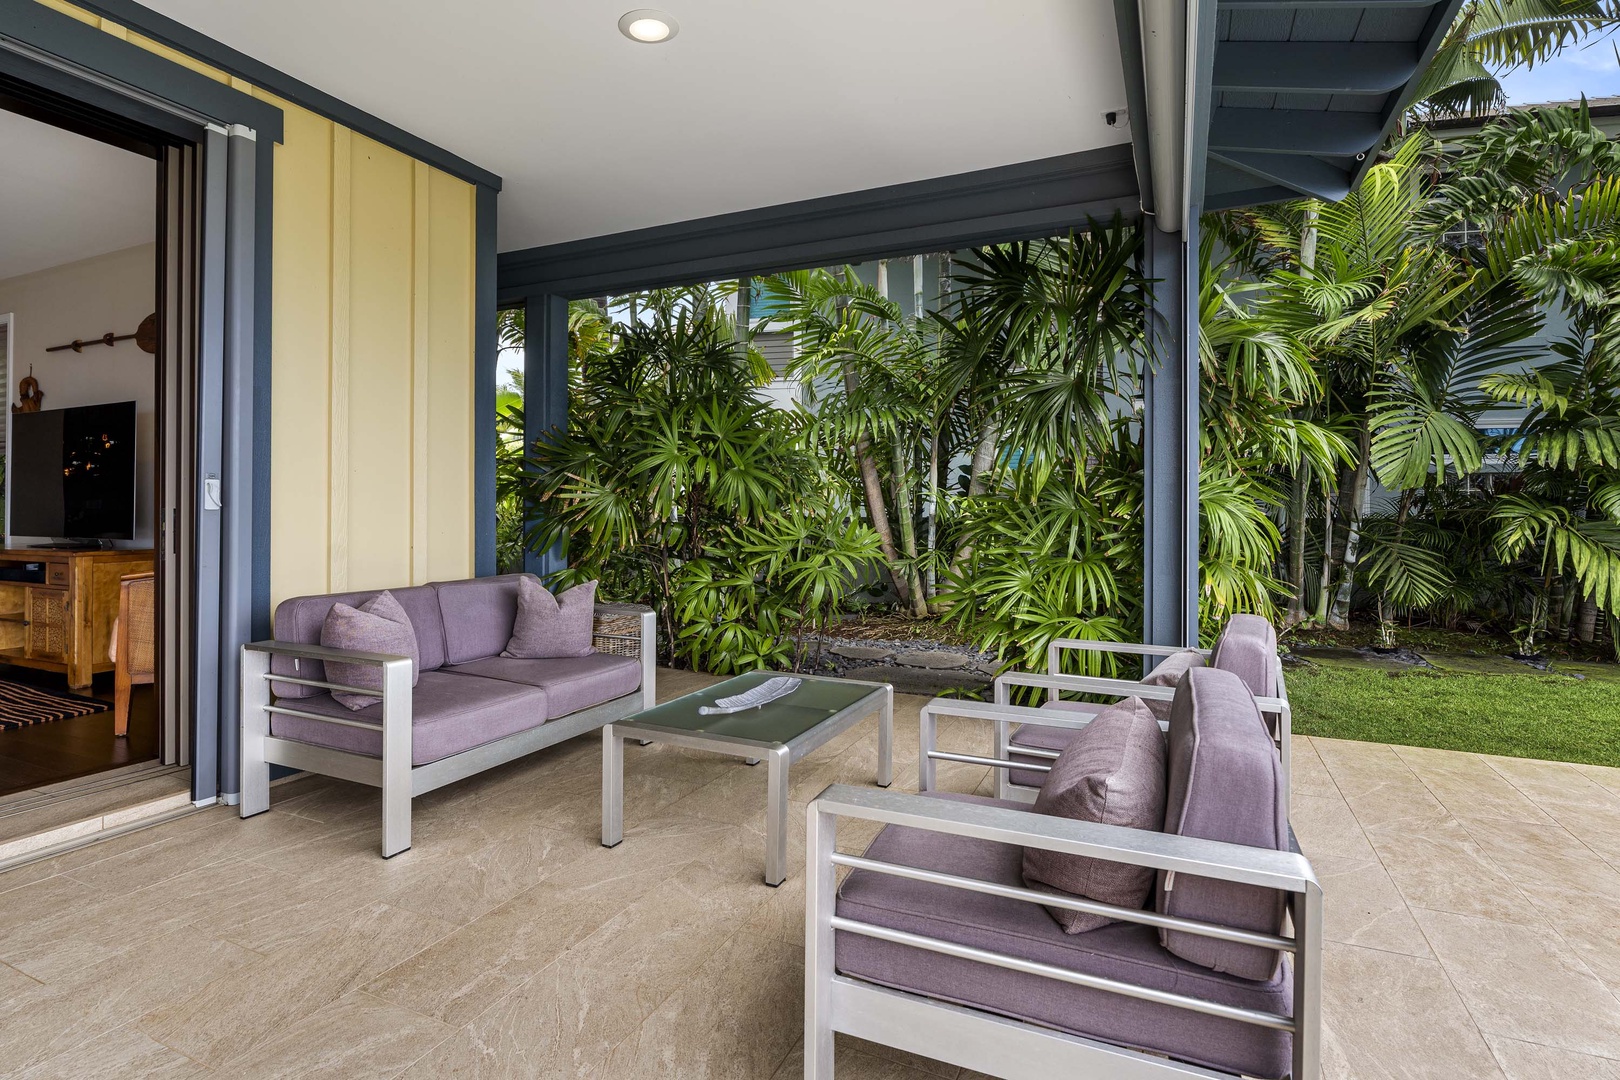 Kailua Kona Vacation Rentals, Holua Kai #20 - Comfortable outdoor conversation area